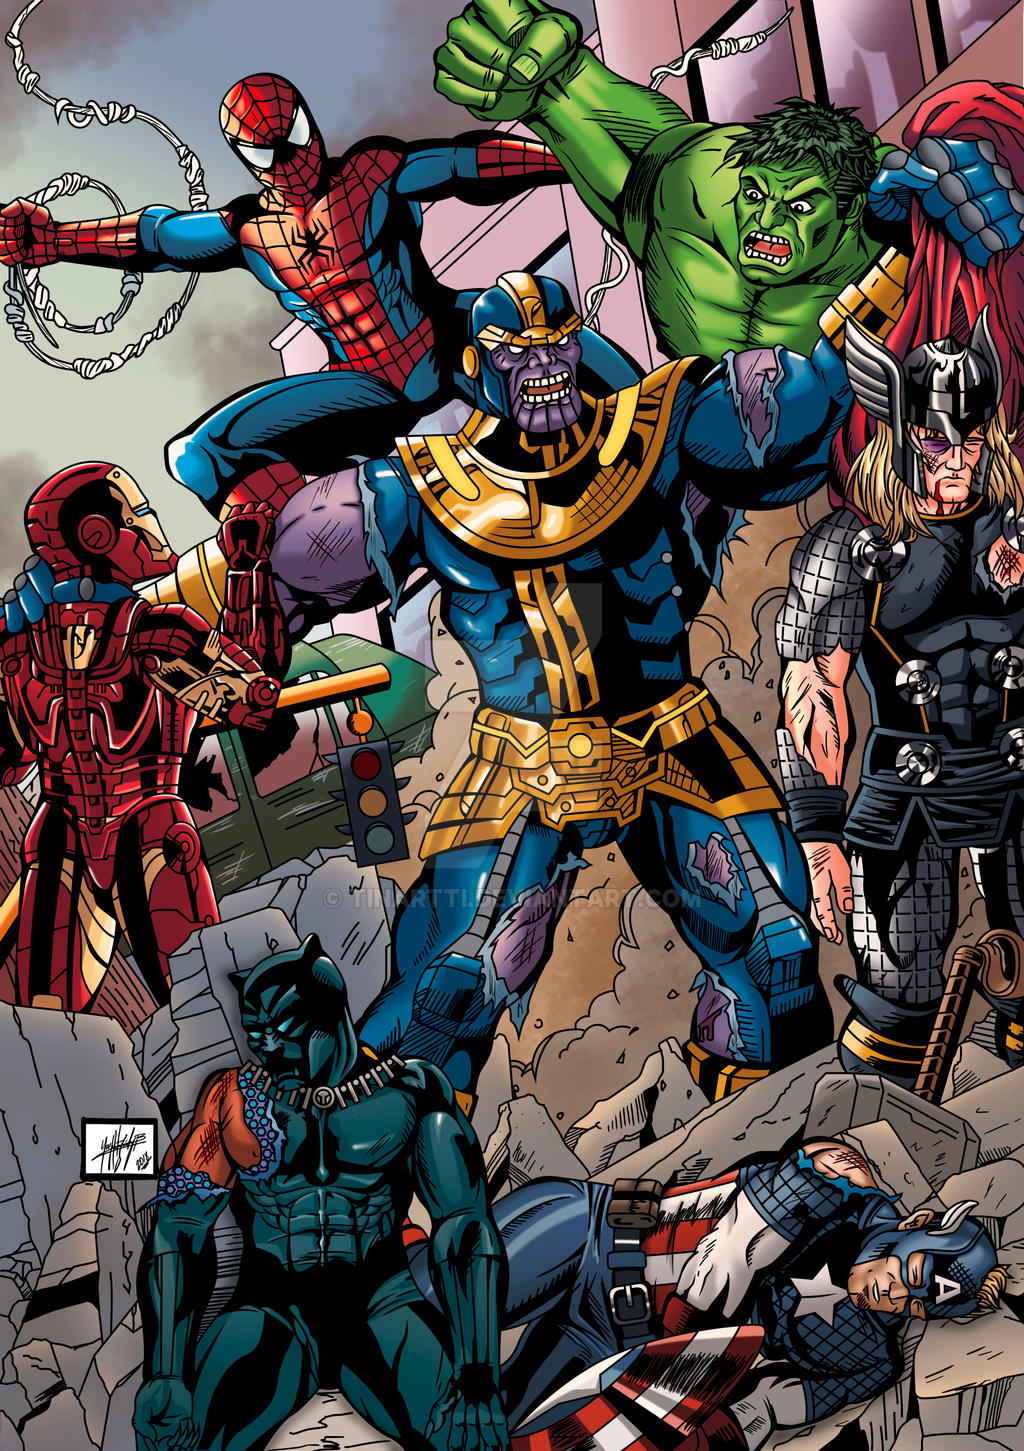 Thanos vs Avengers by Tinartti on DeviantArt